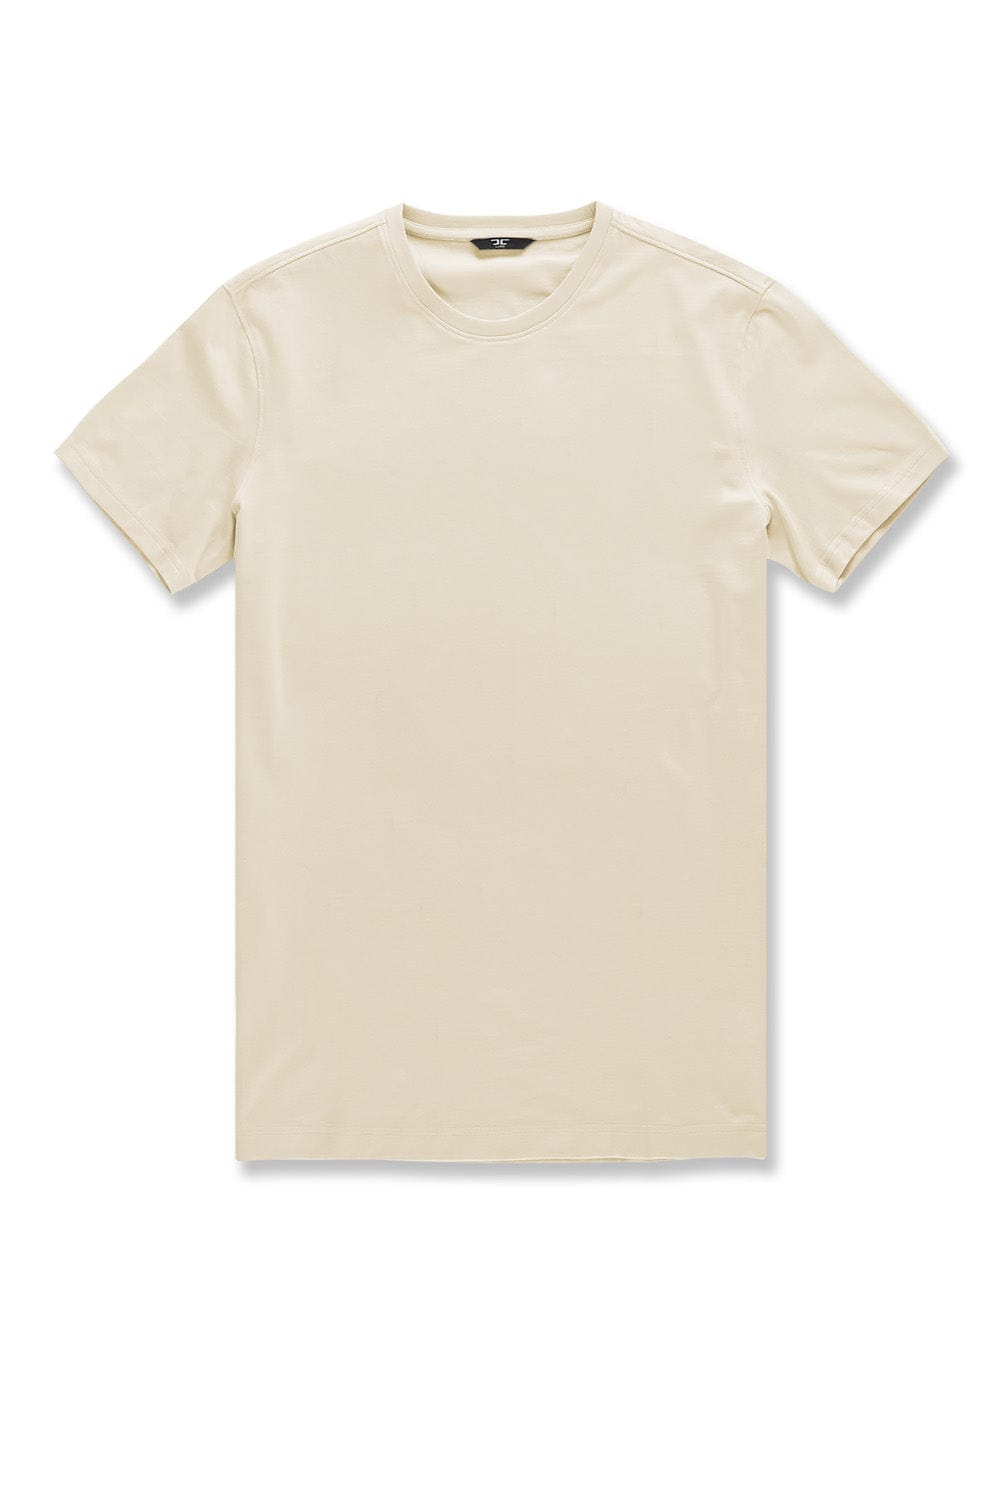 JC Big Men Big Men's Premium Crewneck T-Shirt (Name Your Price) Cream / 4XL